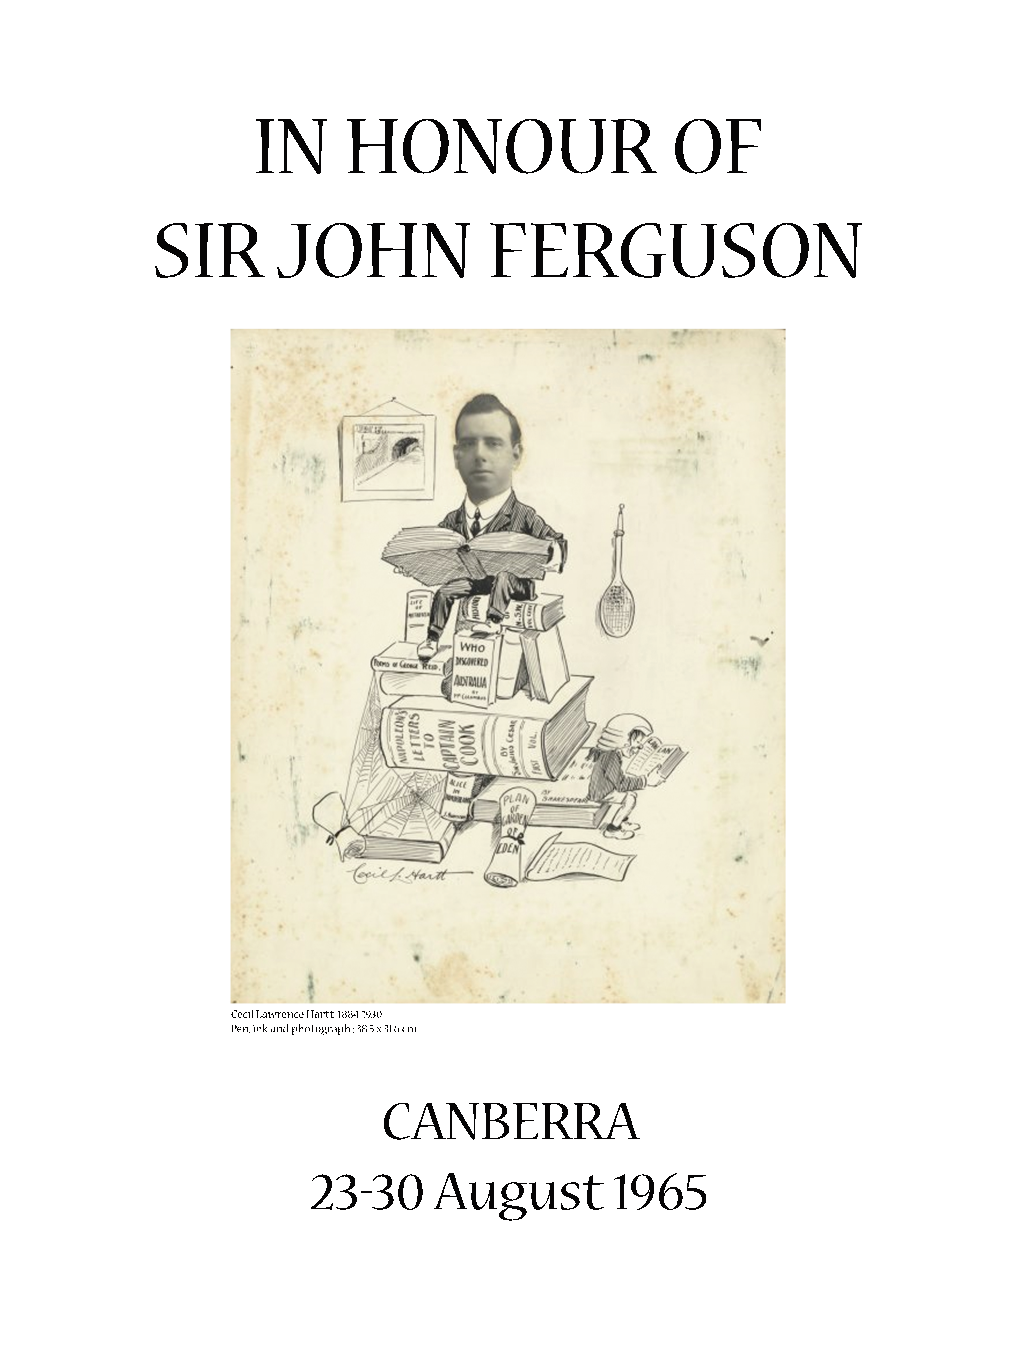 Sir John Ferguson